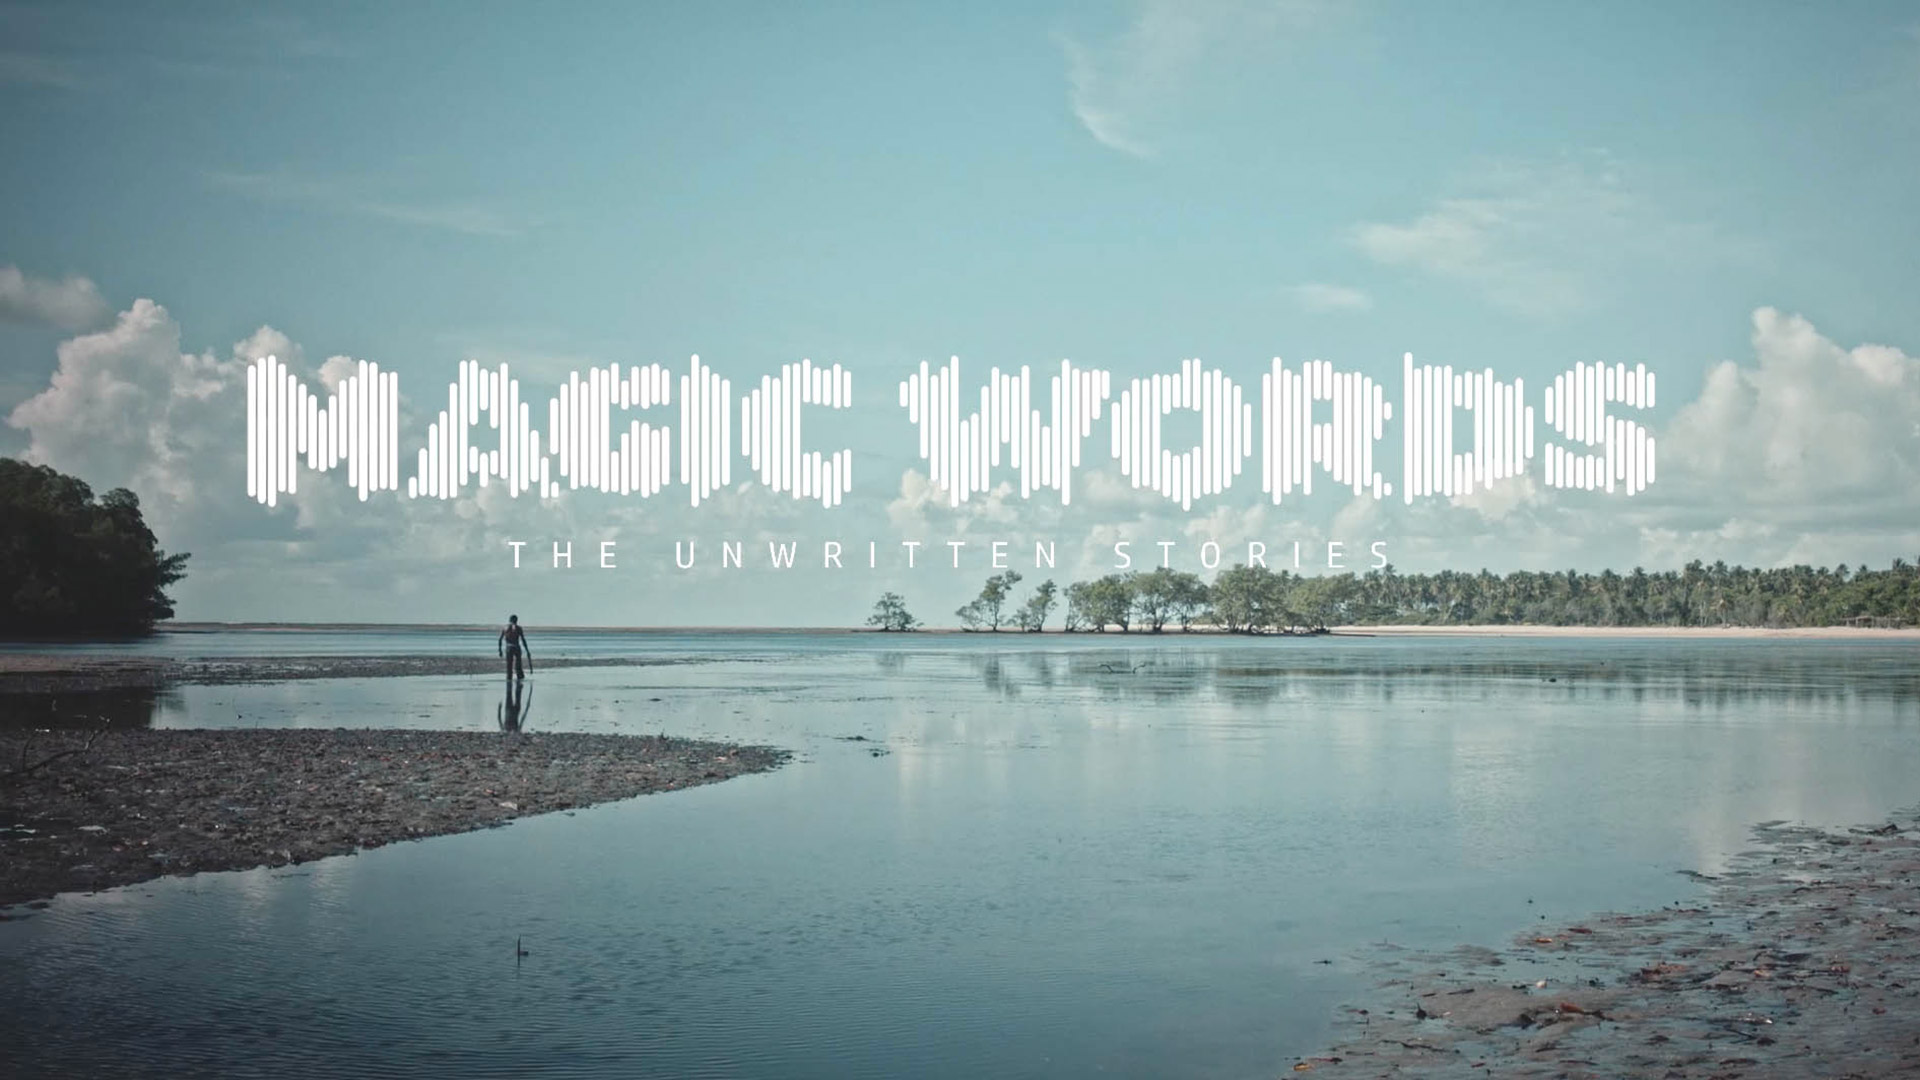 Magic Words - The Documentary